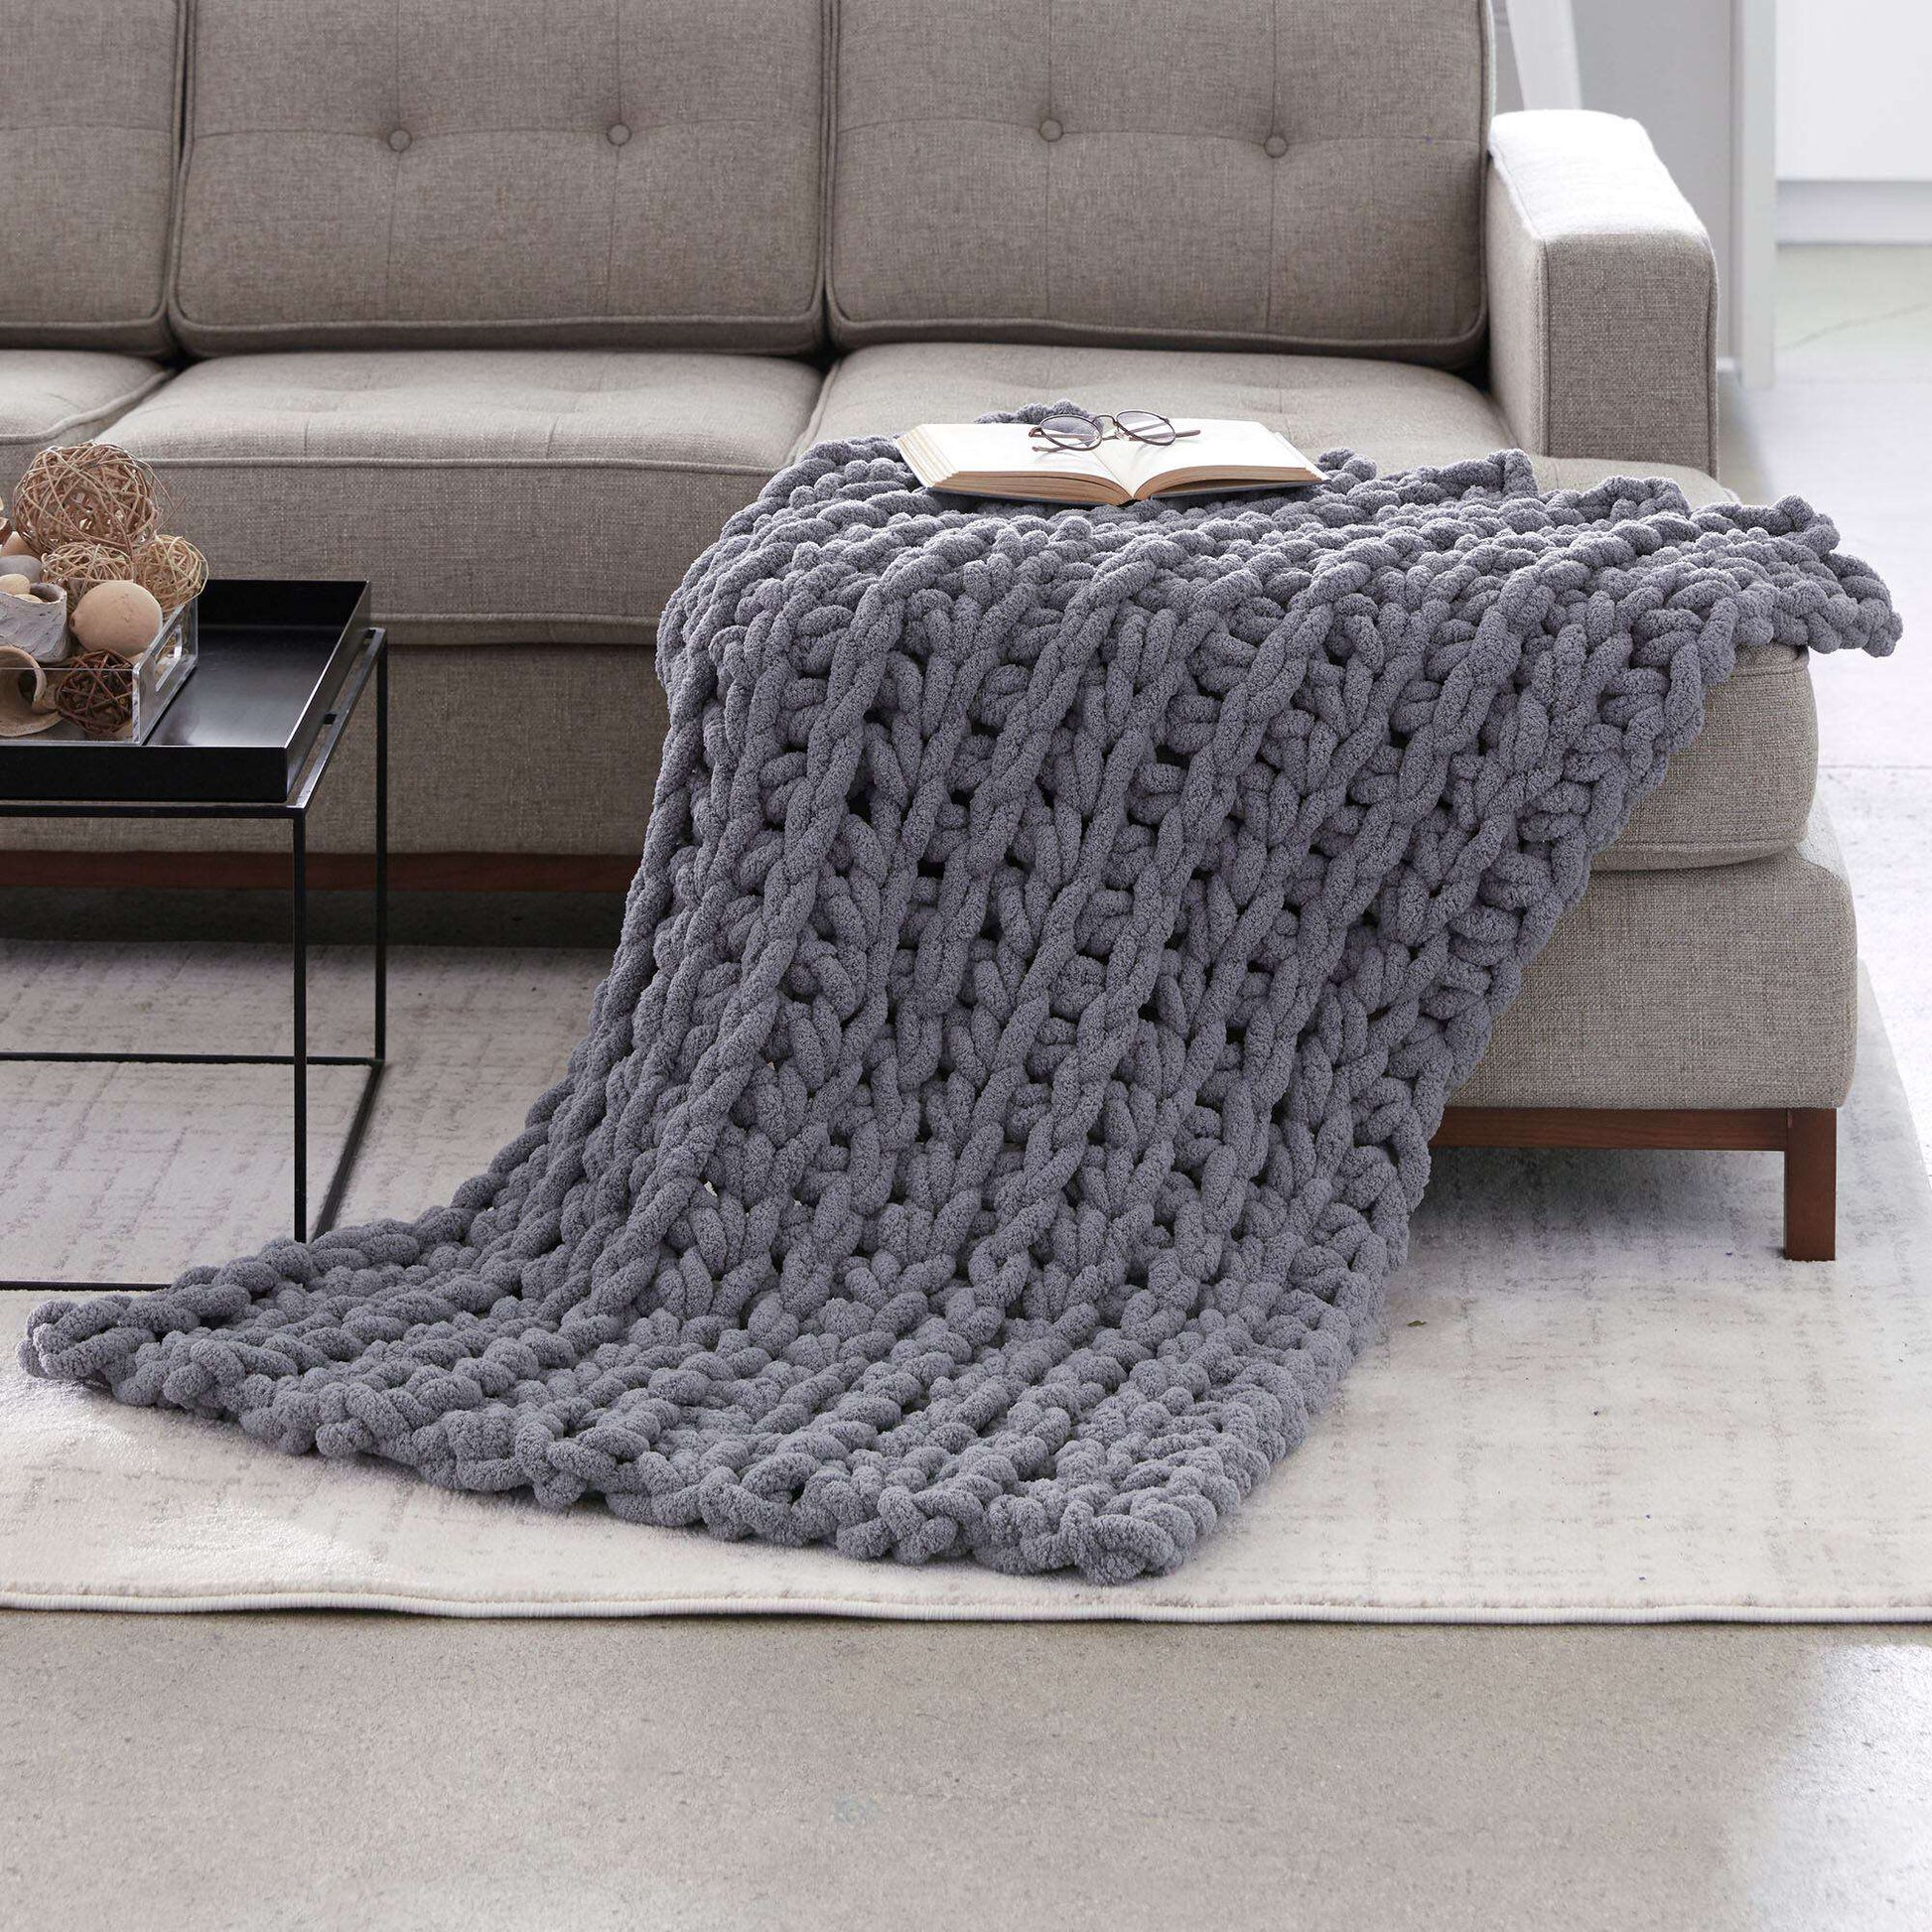 Bernat Big Ridge Crochet Throw Pattern | Yarnspirations